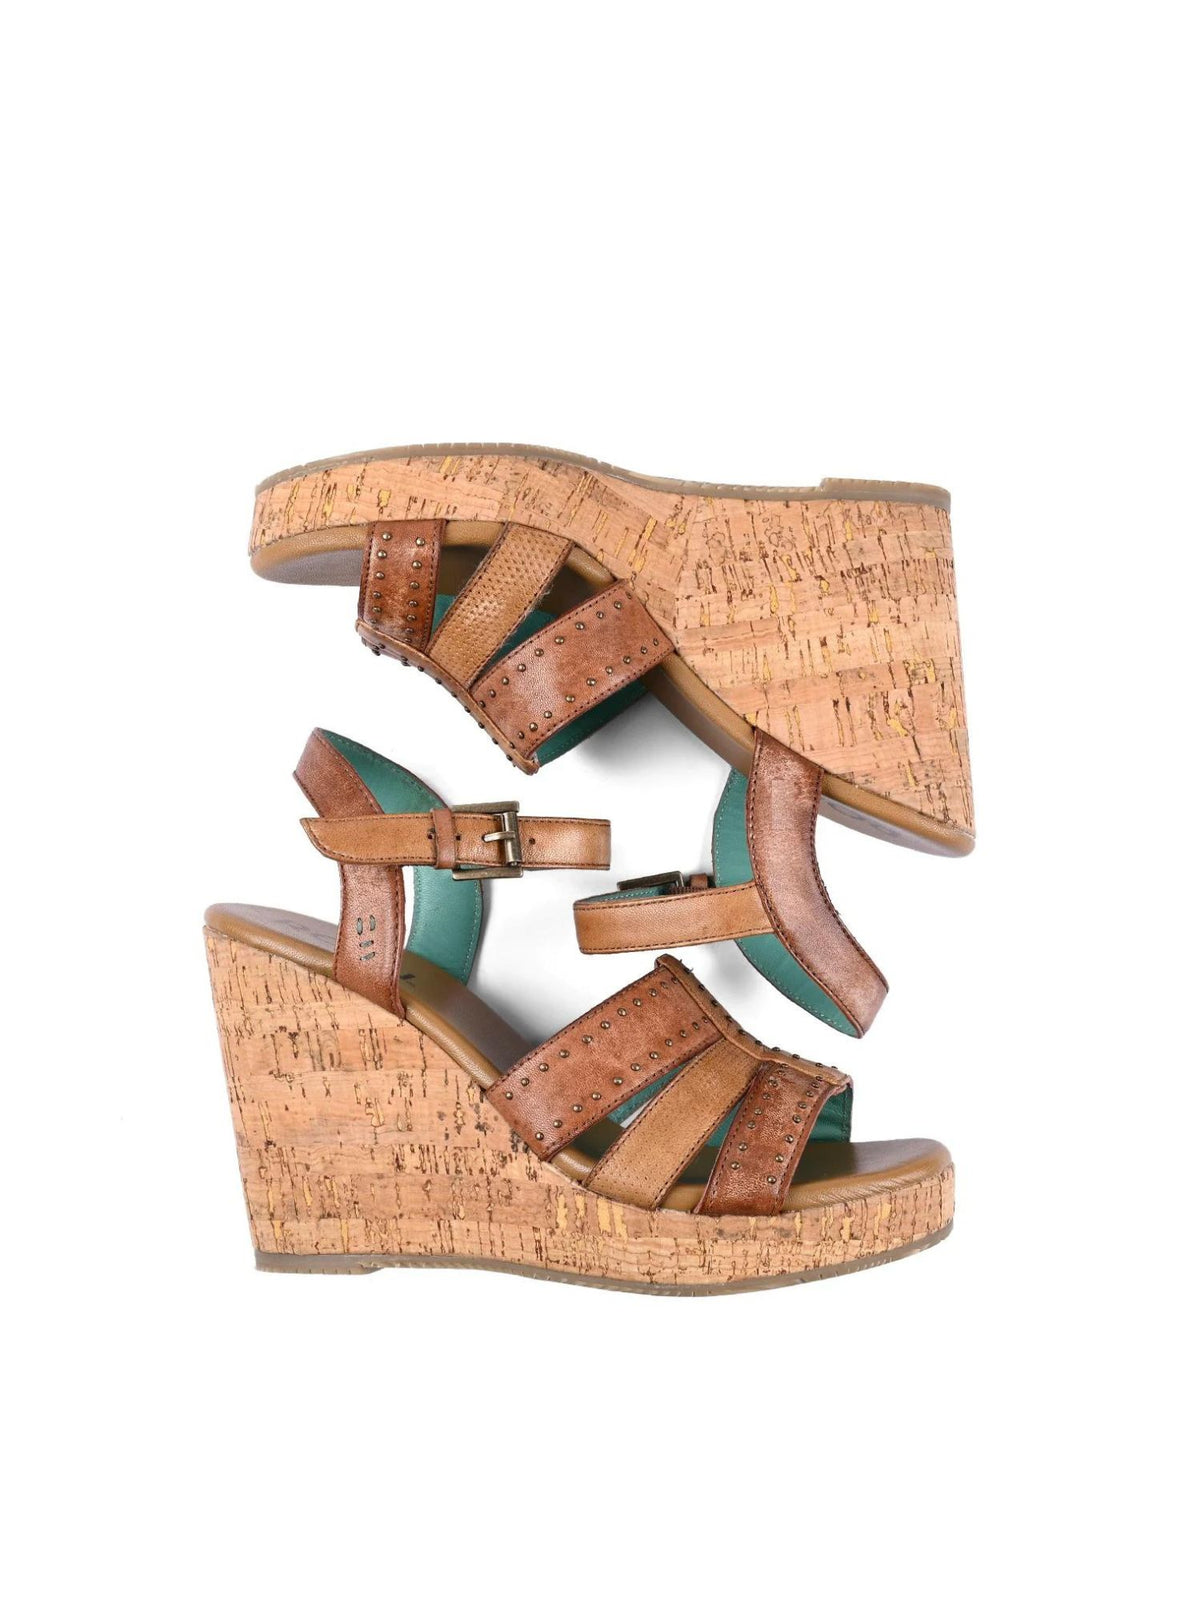 roan different cork wedge sandal in pecan almond-pair